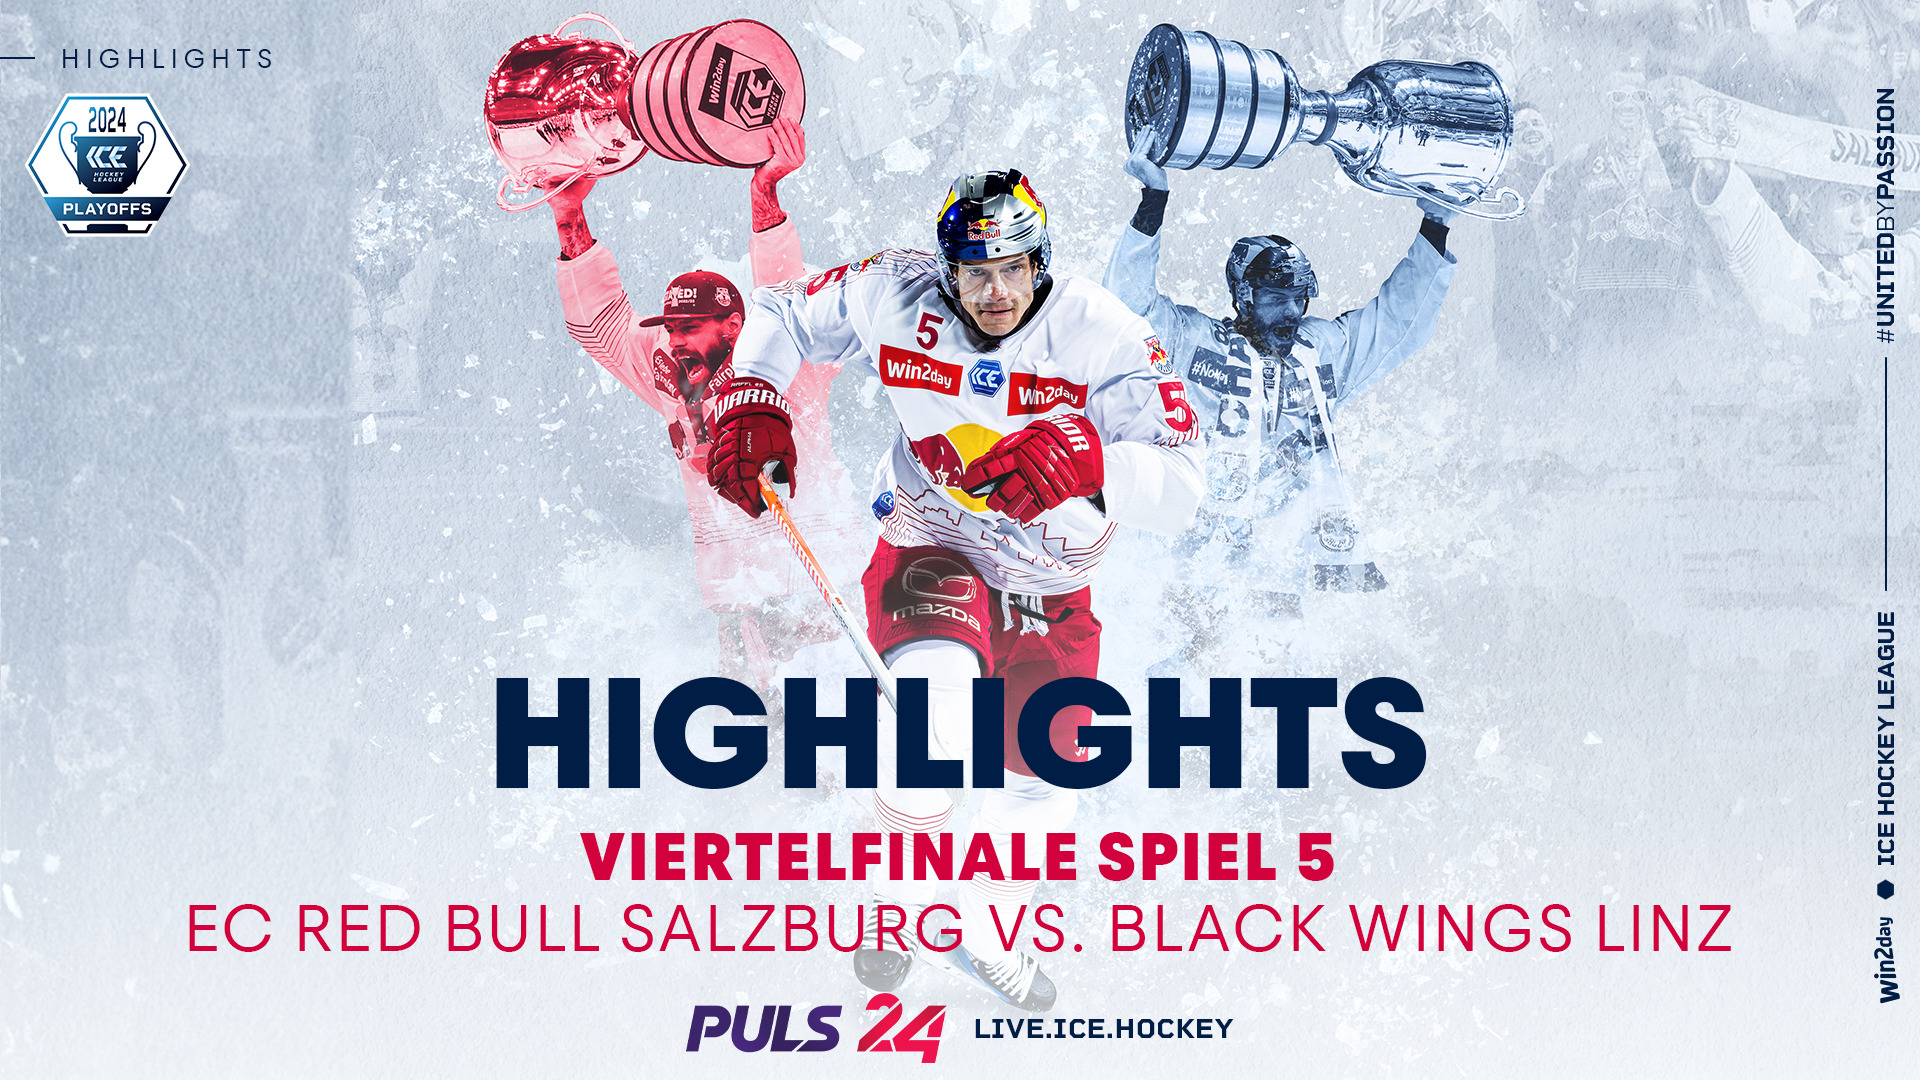 Highlights Viertelfinale 5: EC Red Bull Salzburg vs. Black Wings Linz